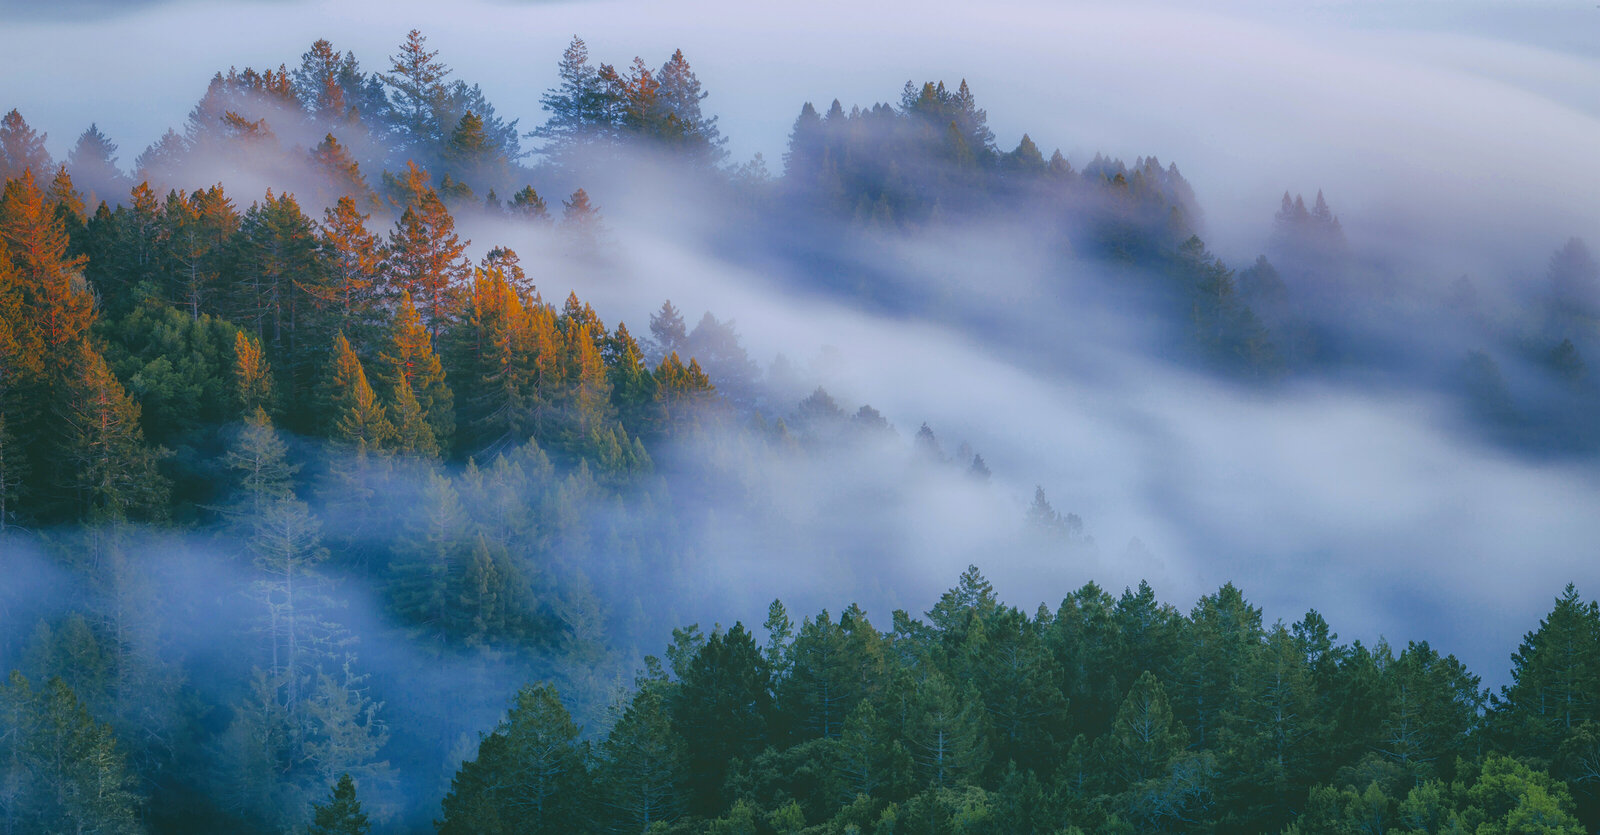 Rolling fog through California trees.